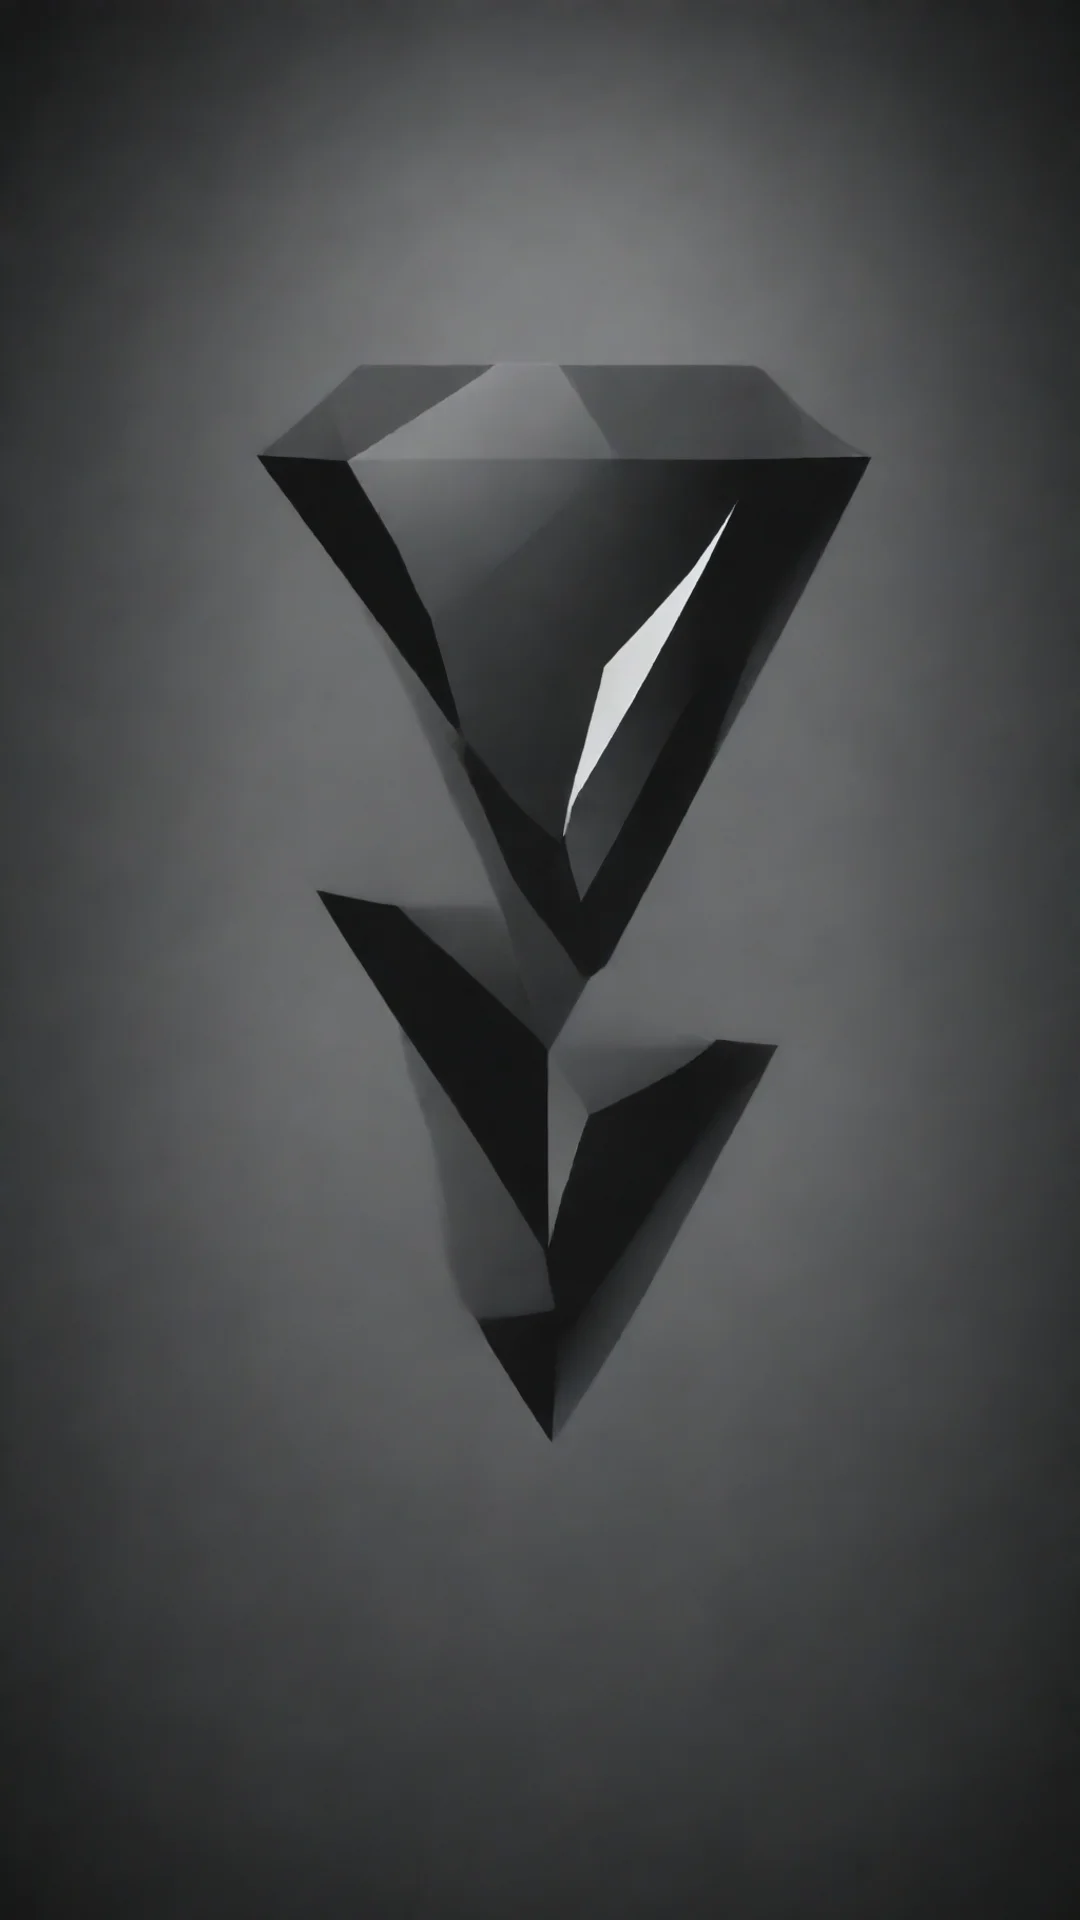 aiamazing black diamond logo awesome portrait 2 tall